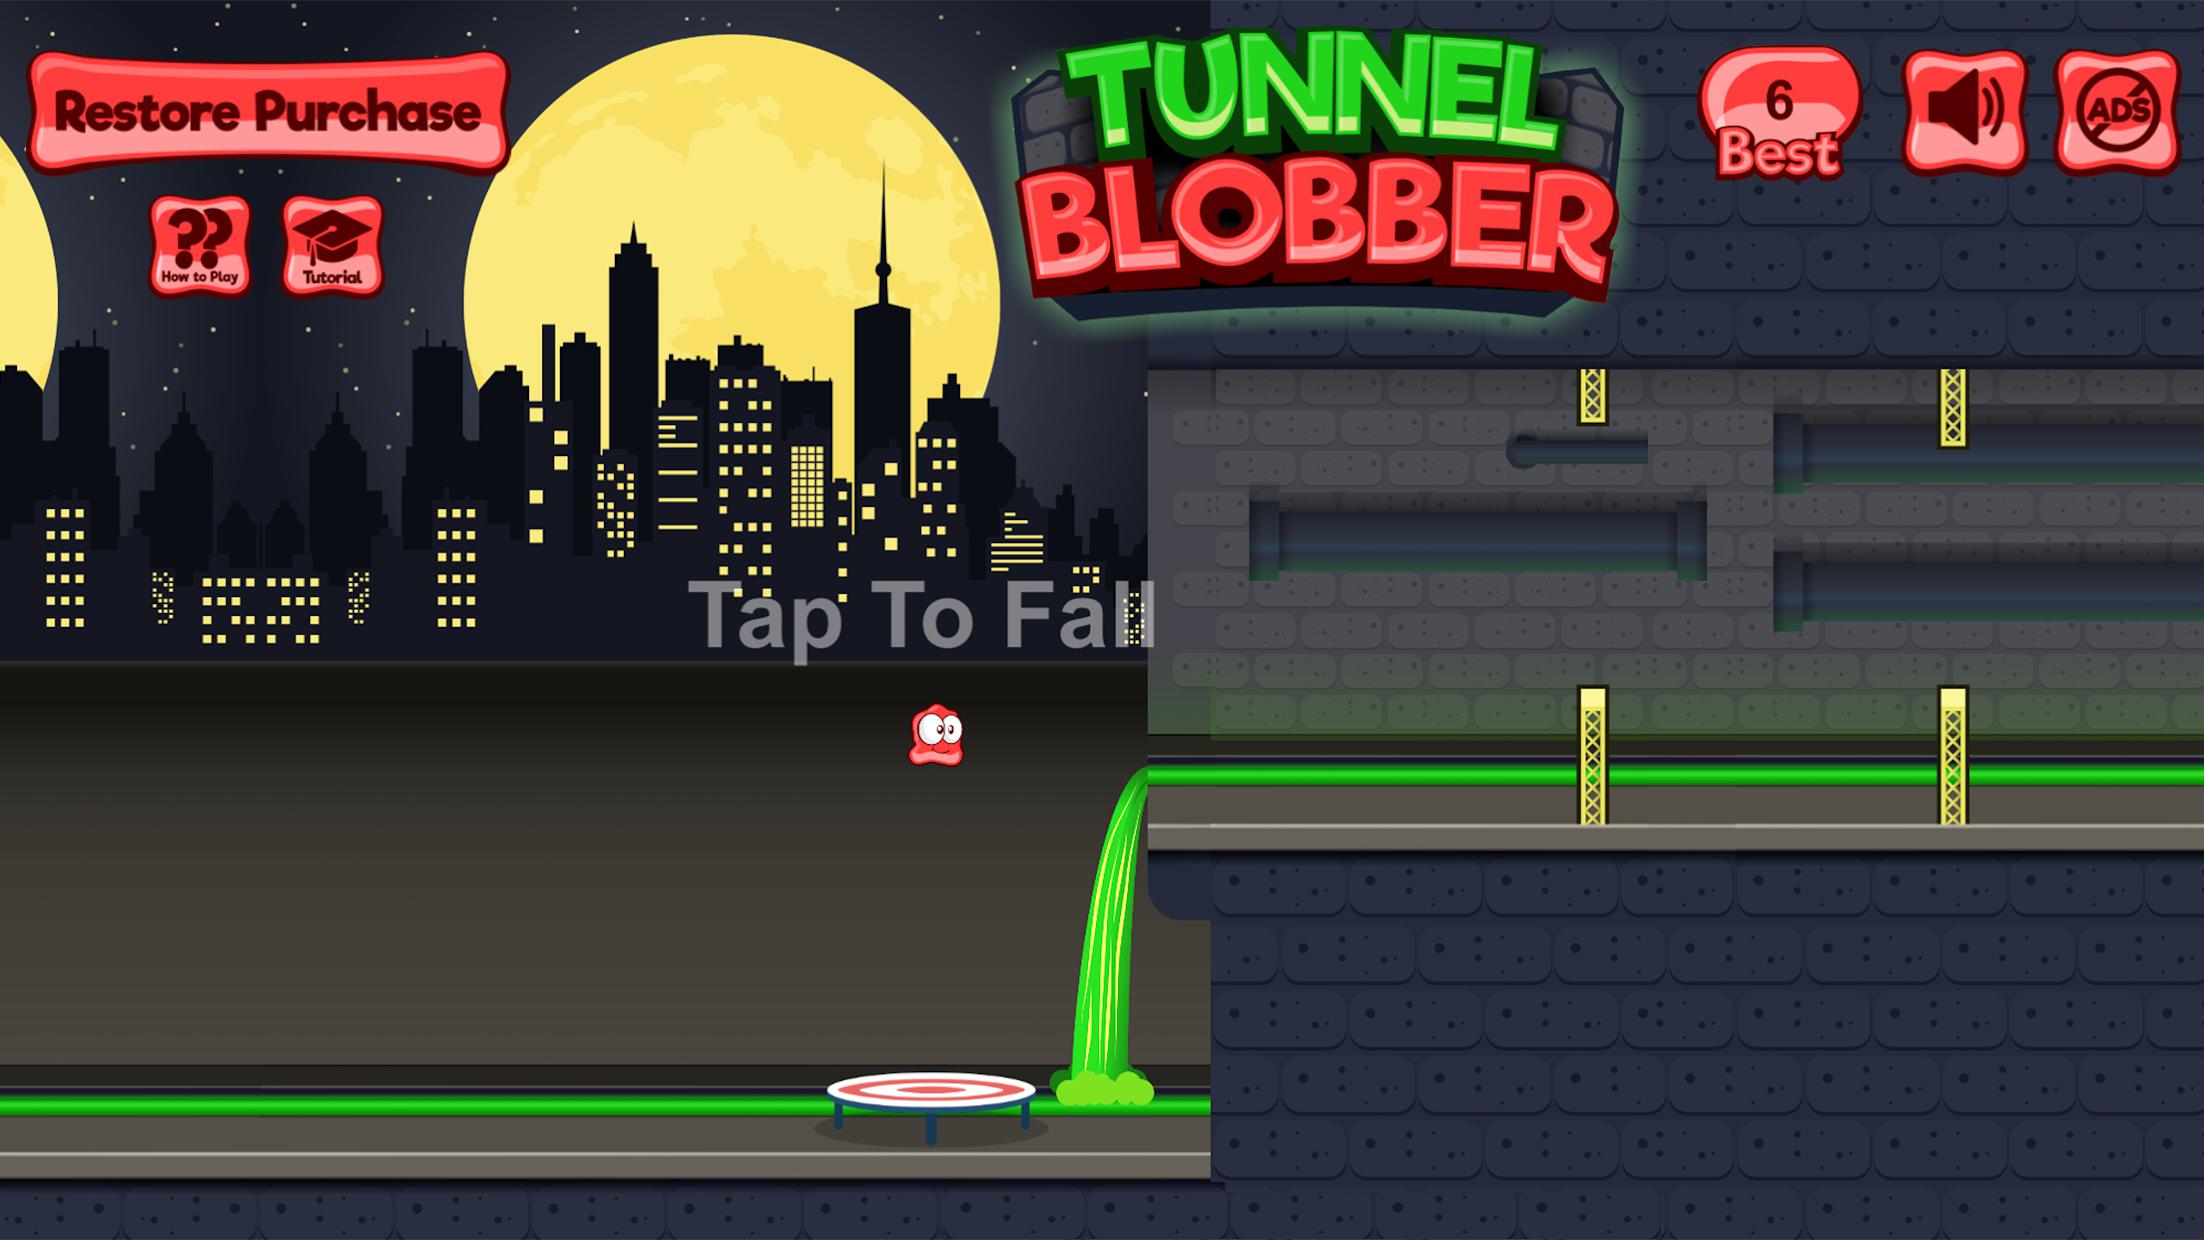 Tunnel Blobber